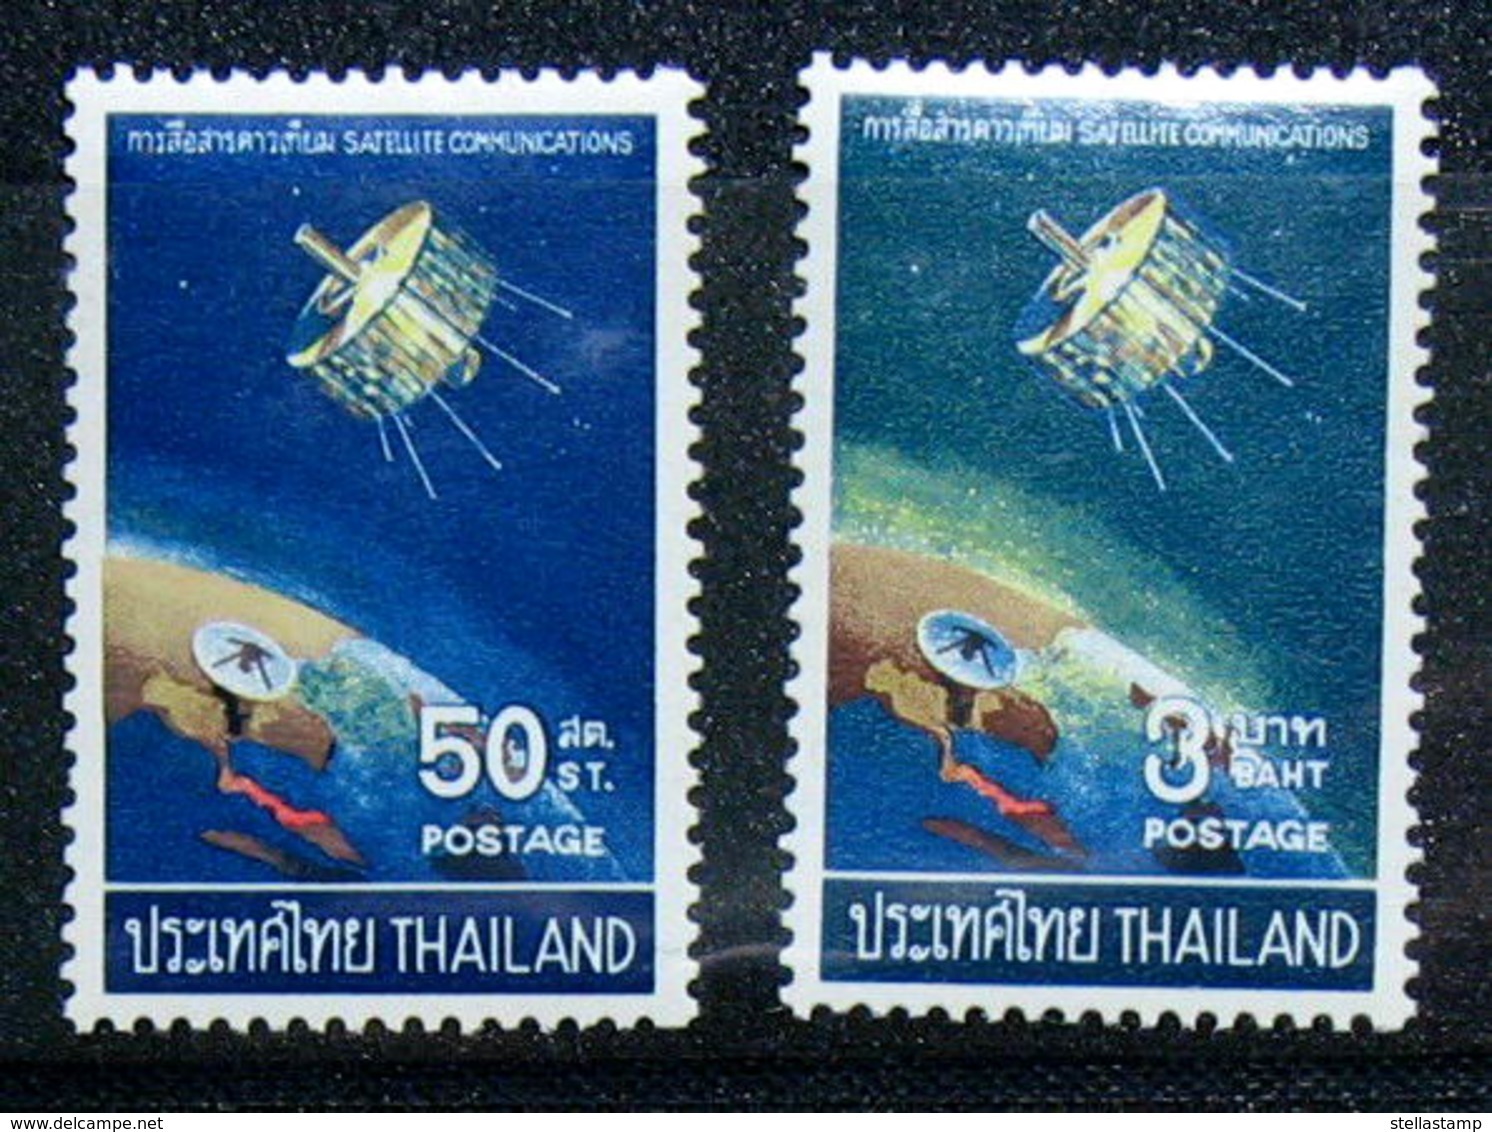 Thailand Stamp 1968 Satellite Communications - Thailand